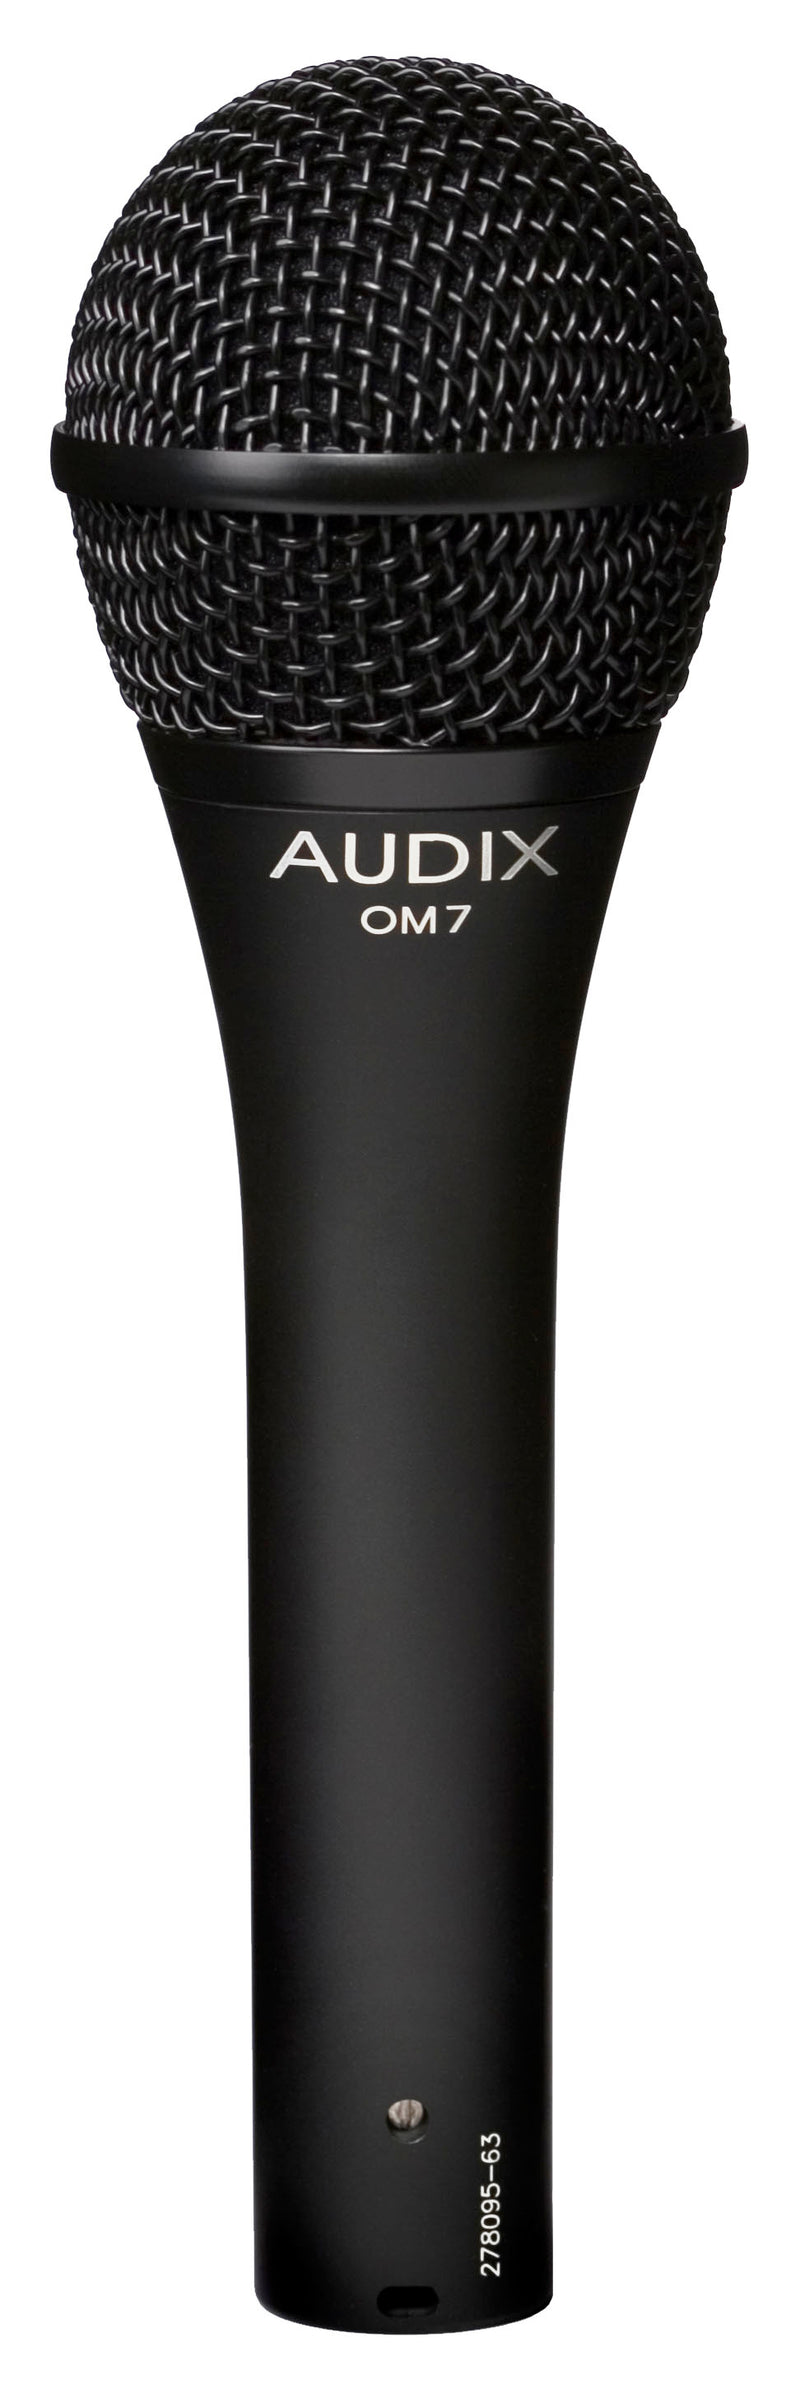 🇺🇸 Audix OM7 Dynamic Vocal Microphone Concert Level Professional